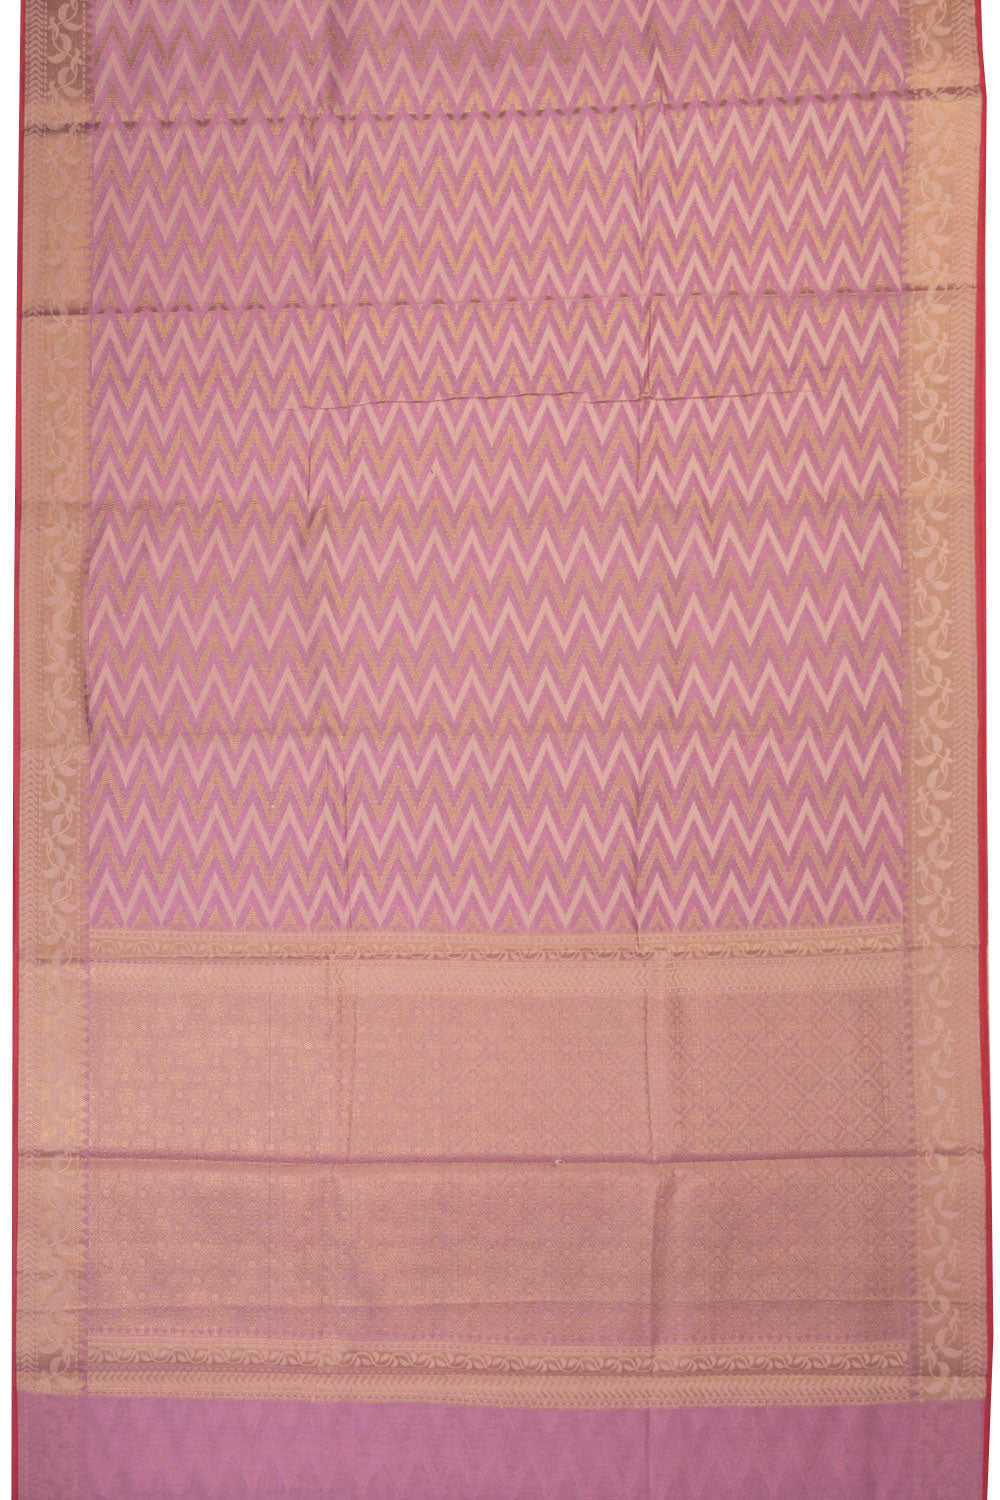 Lavender Handloom Banarasi Silk Cotton Saree 10070496 - Avishya